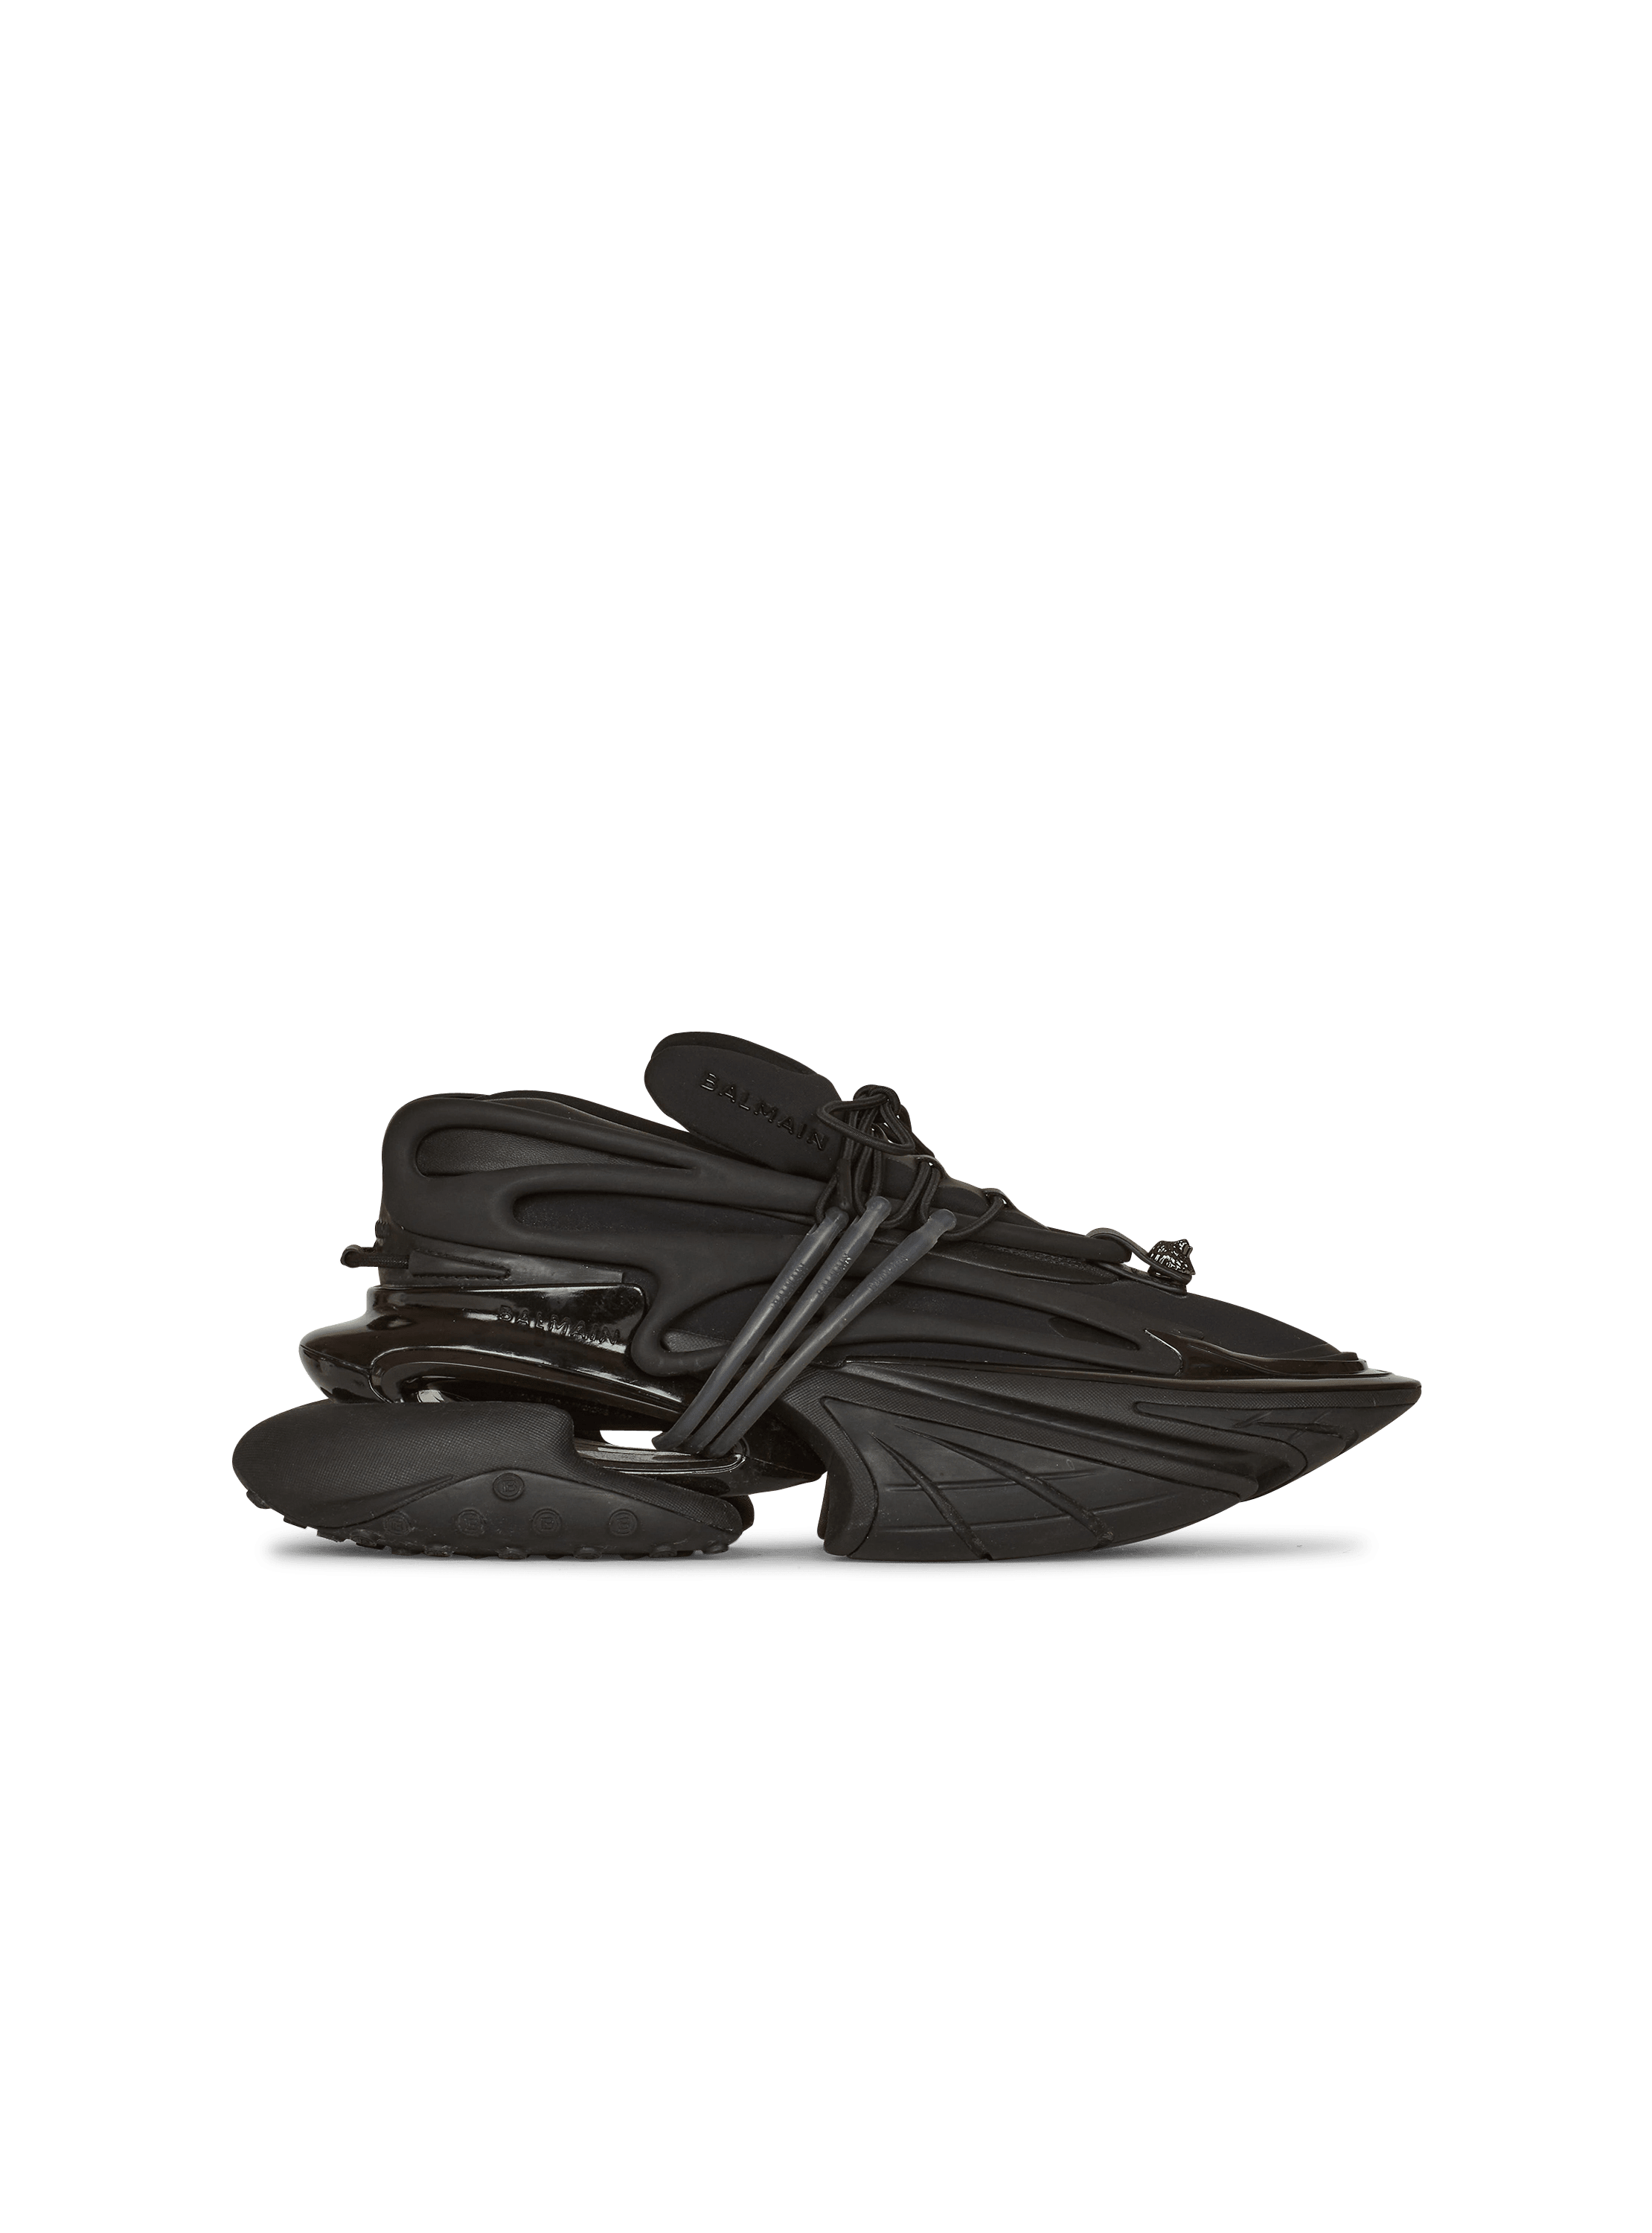 Unicorn Low-Top-Sneakers aus Leder, schwarz, hi-res